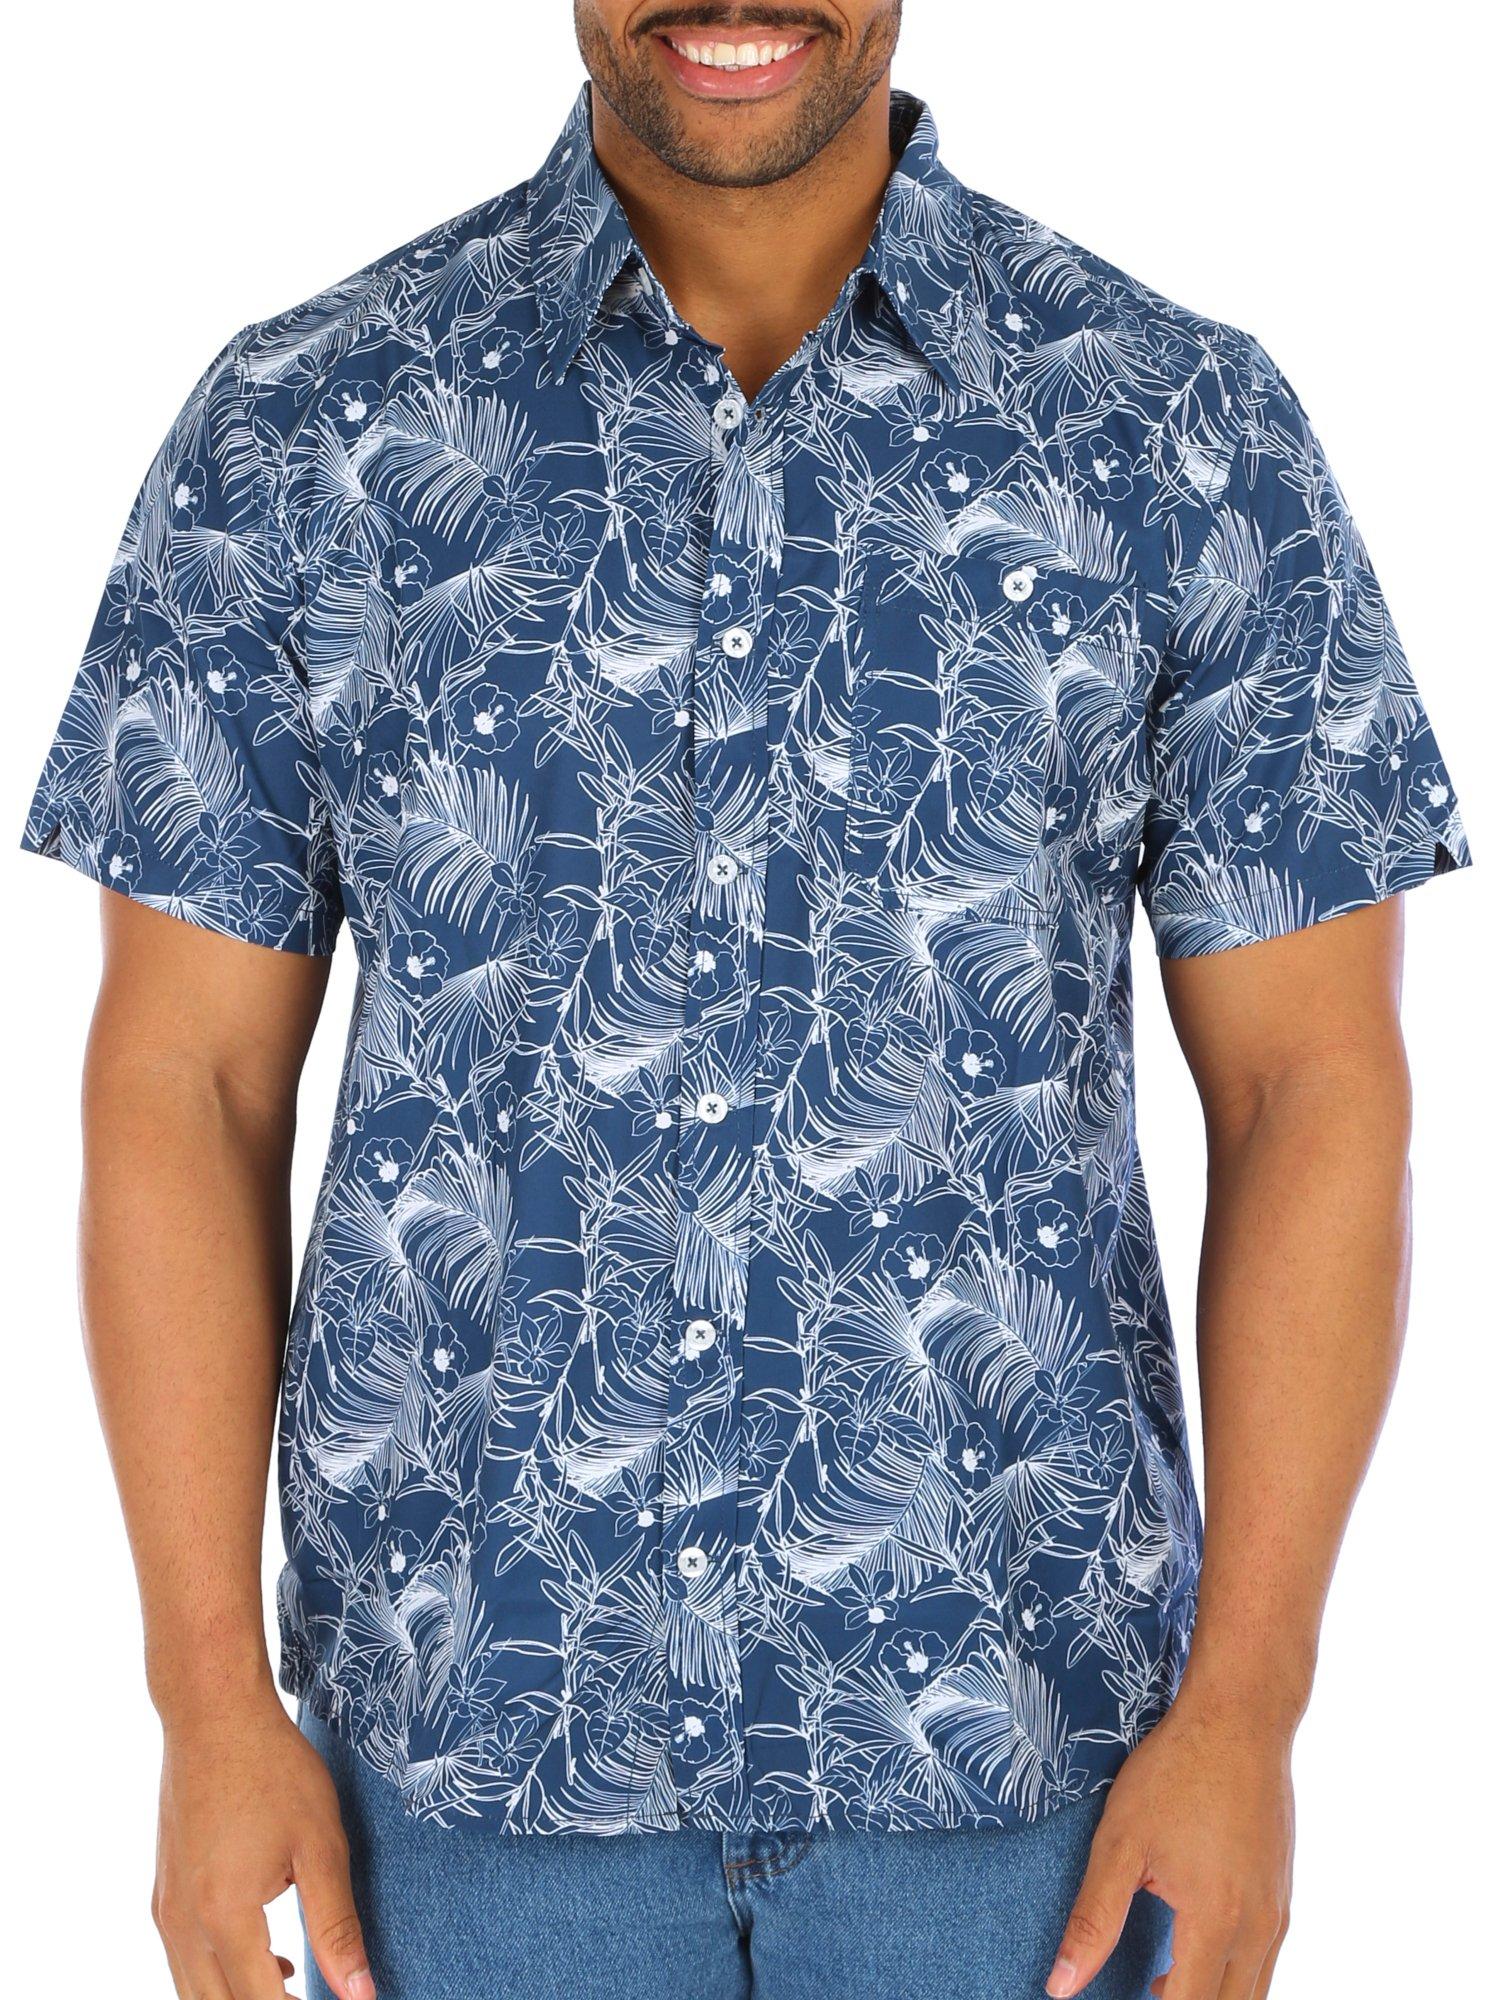 Men's Outdoor Palm Leaf Print Button Down Shirt